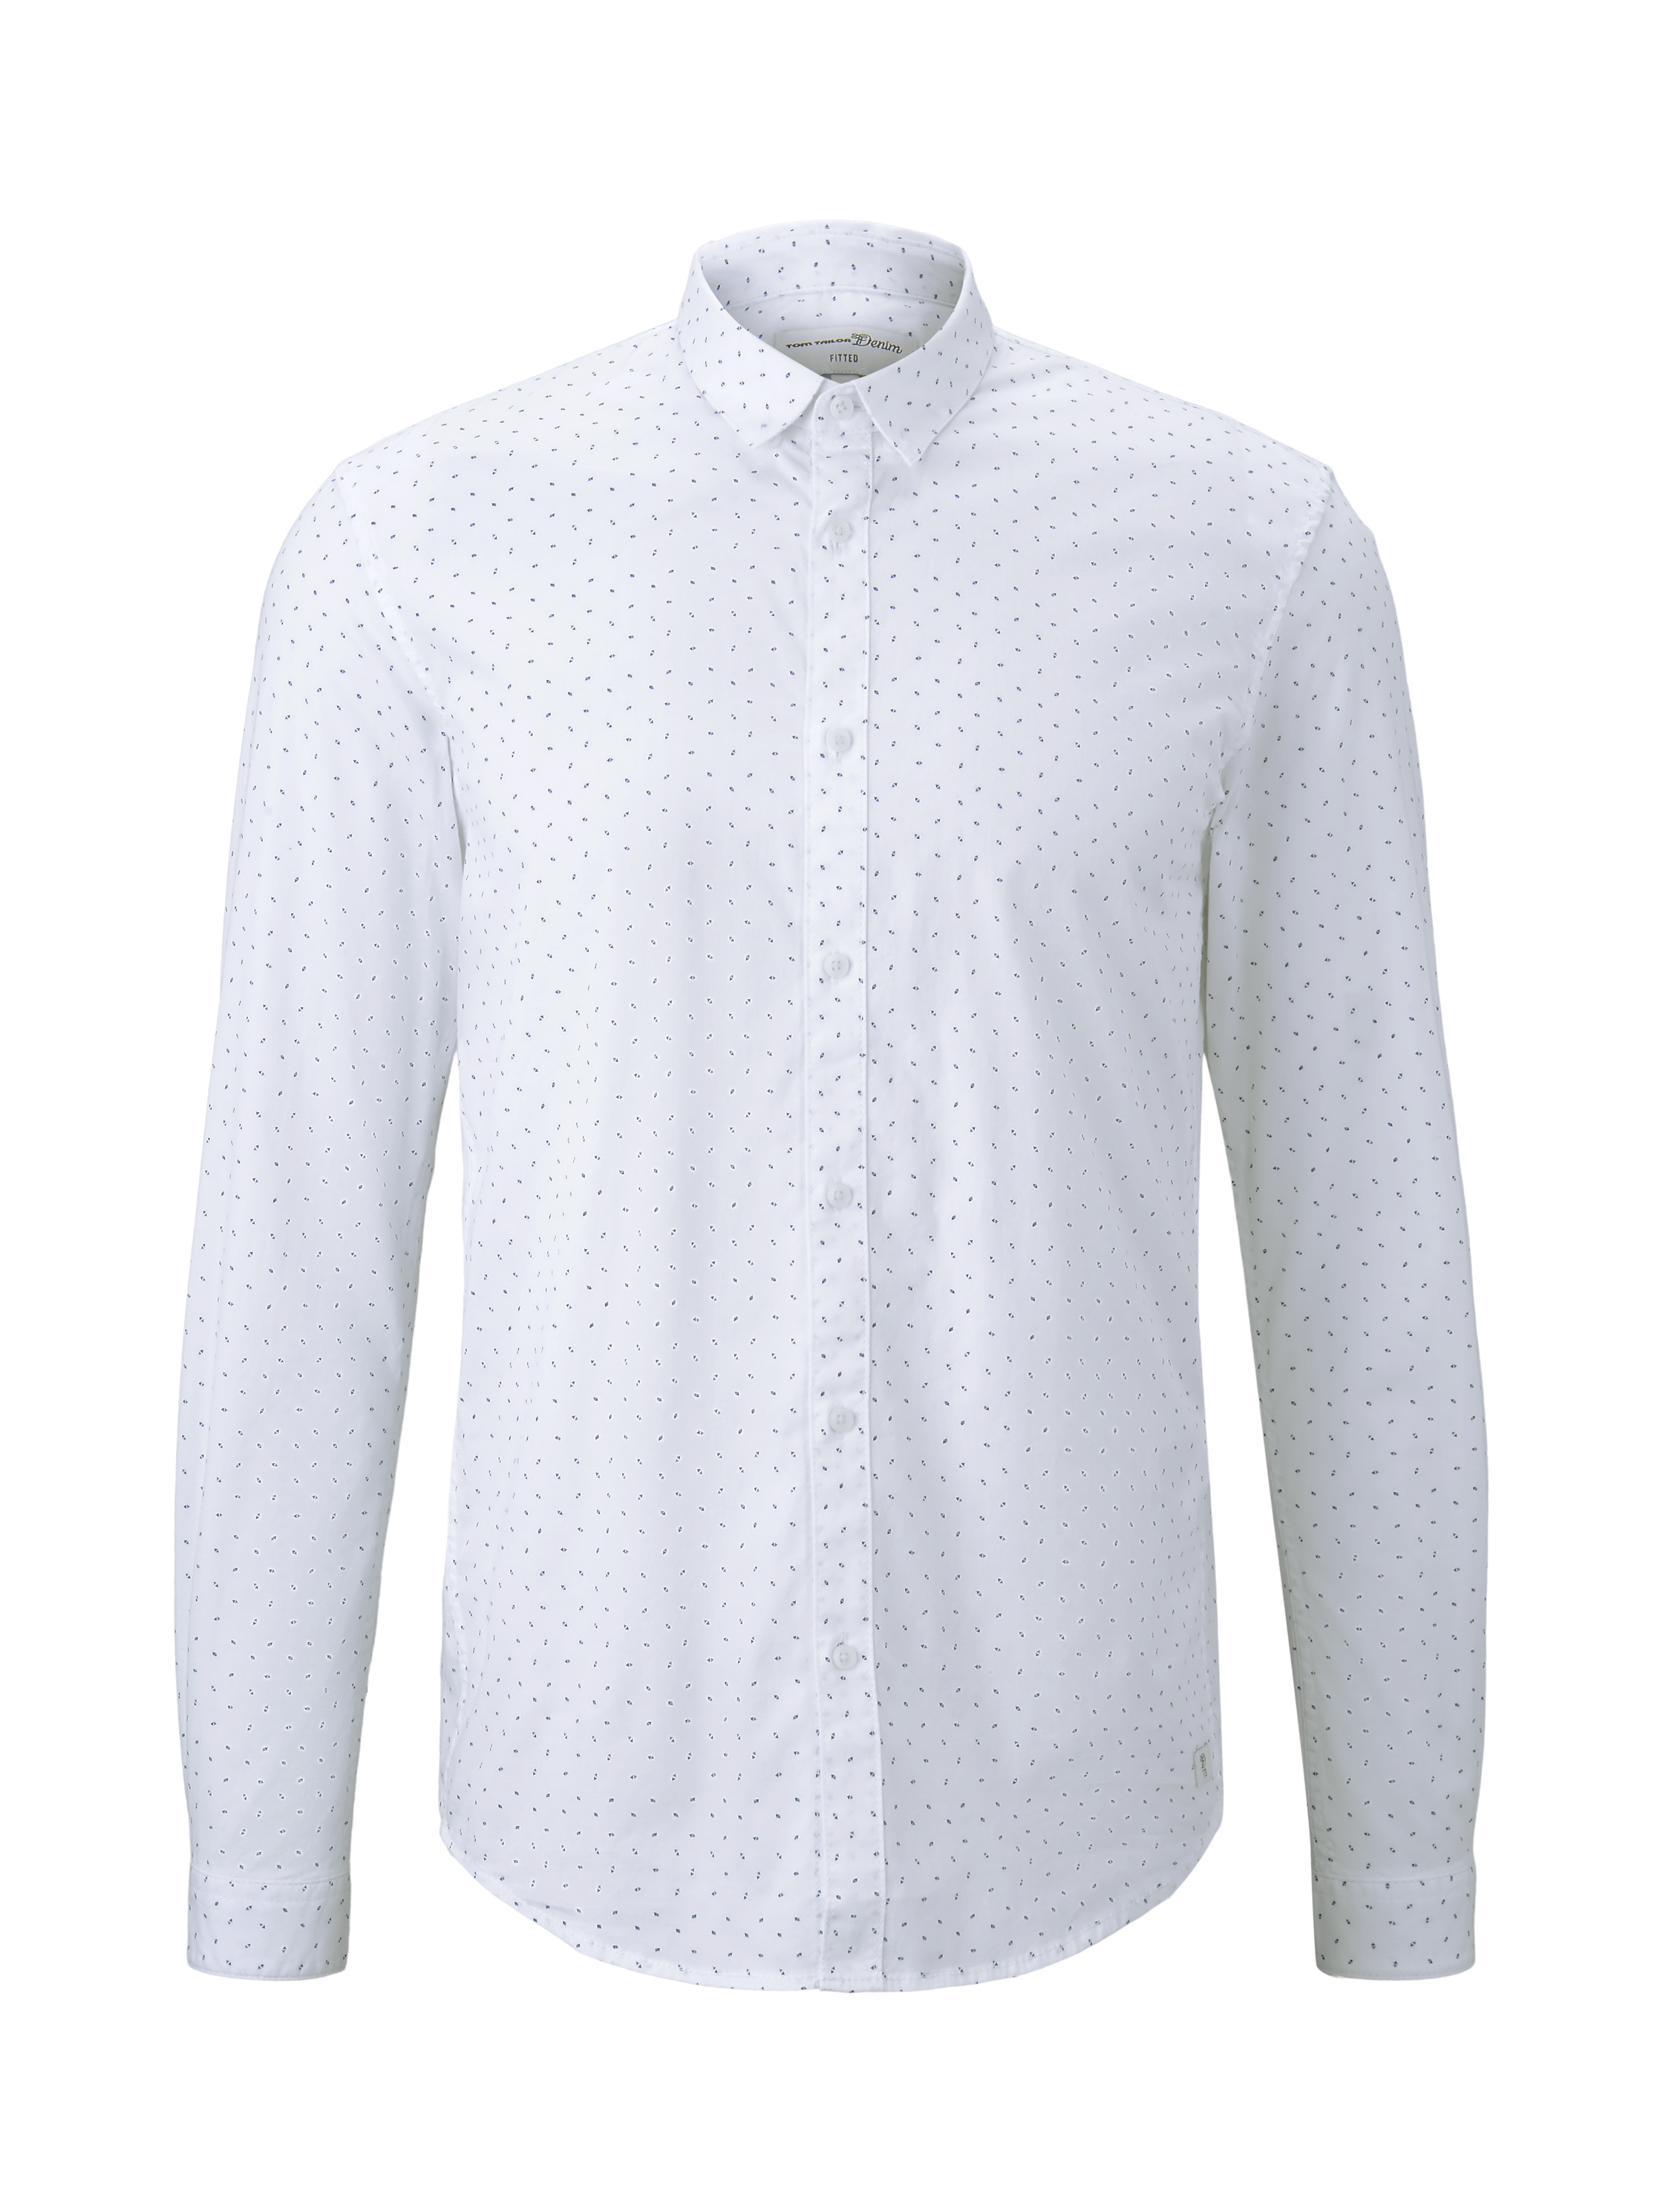 allover printed stretch shirt, white small triangle print